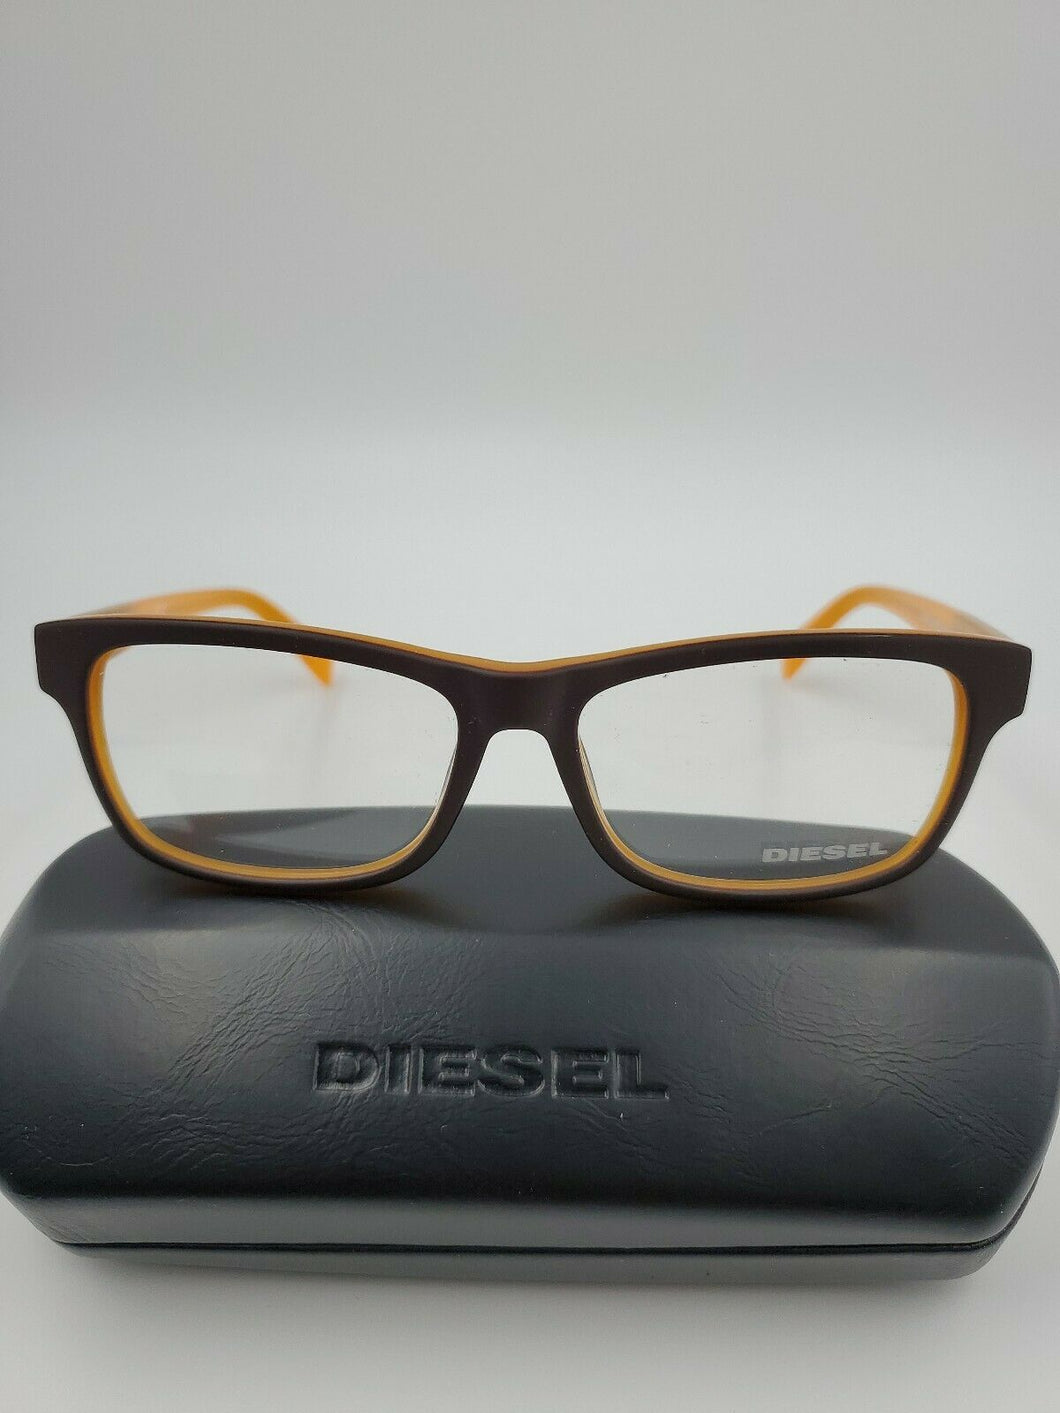 New Diesel Eyeglasses DL 5039 050  Brown/Orange DL5039 54mm RX FRAMES UNISEX